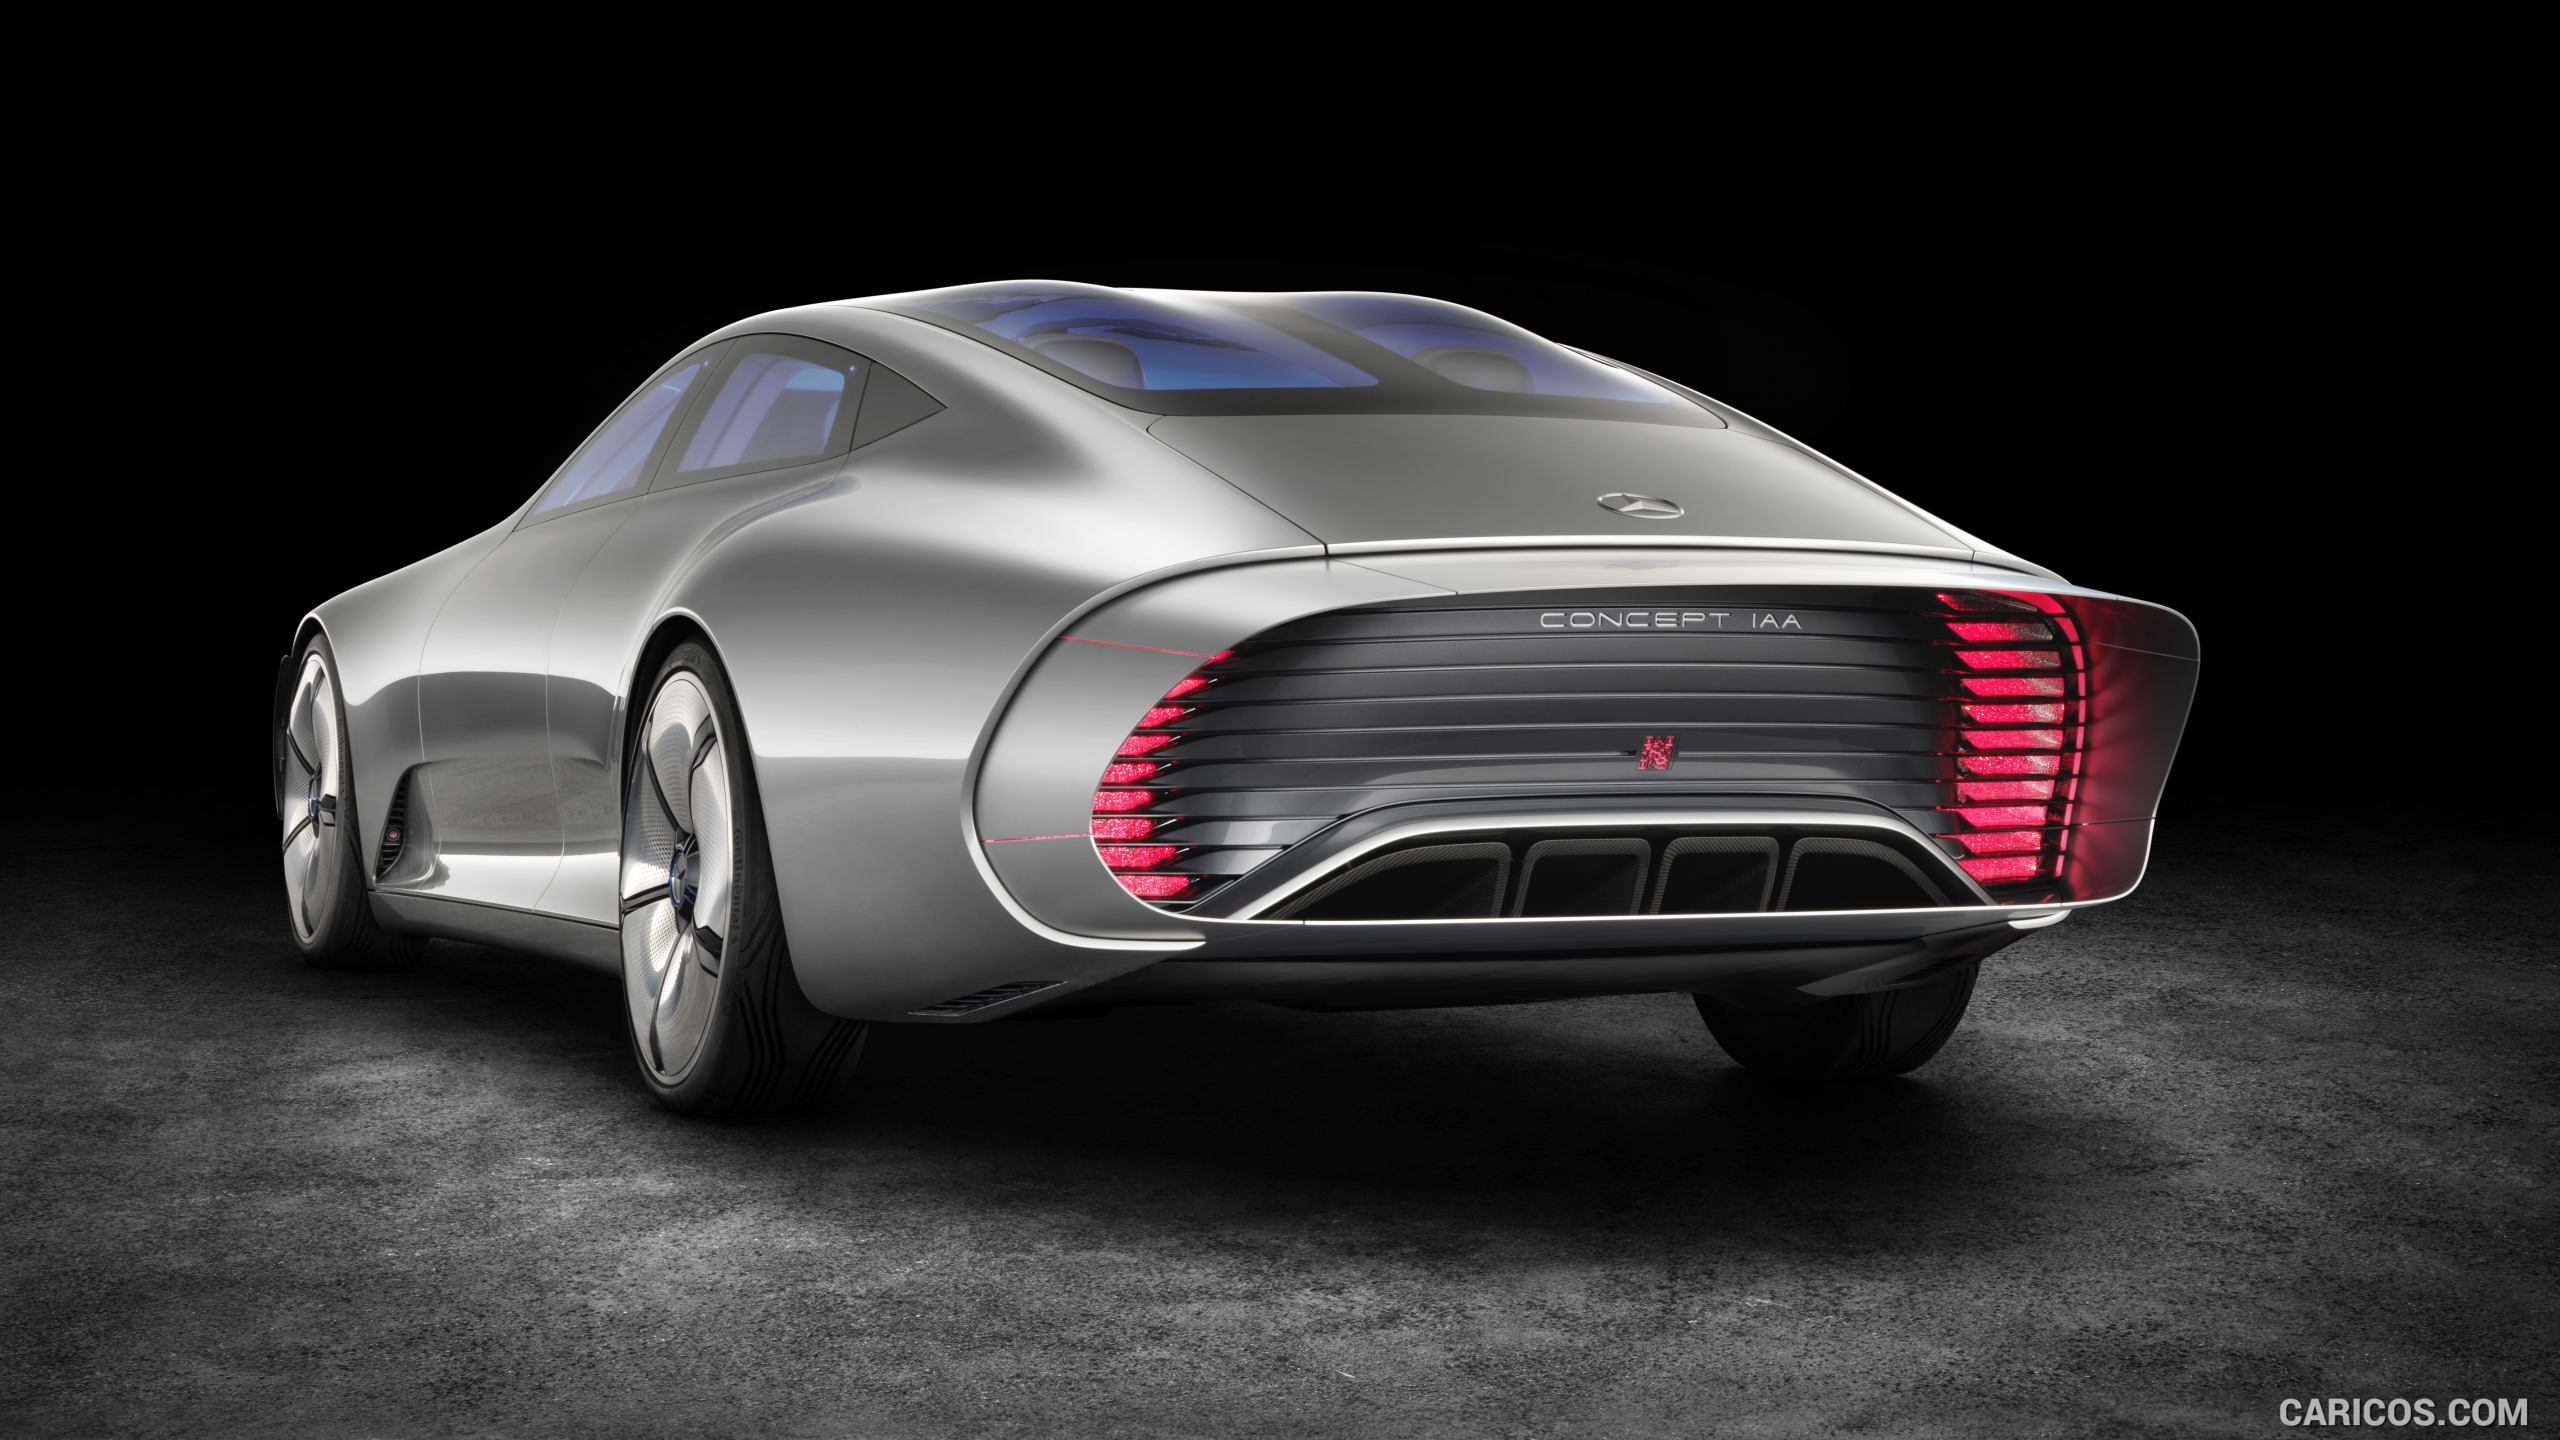 2015 Mercedes-Benz Concept IAA (Intelligent Aerodynamic Automobile)  - Rear, #16 of 49